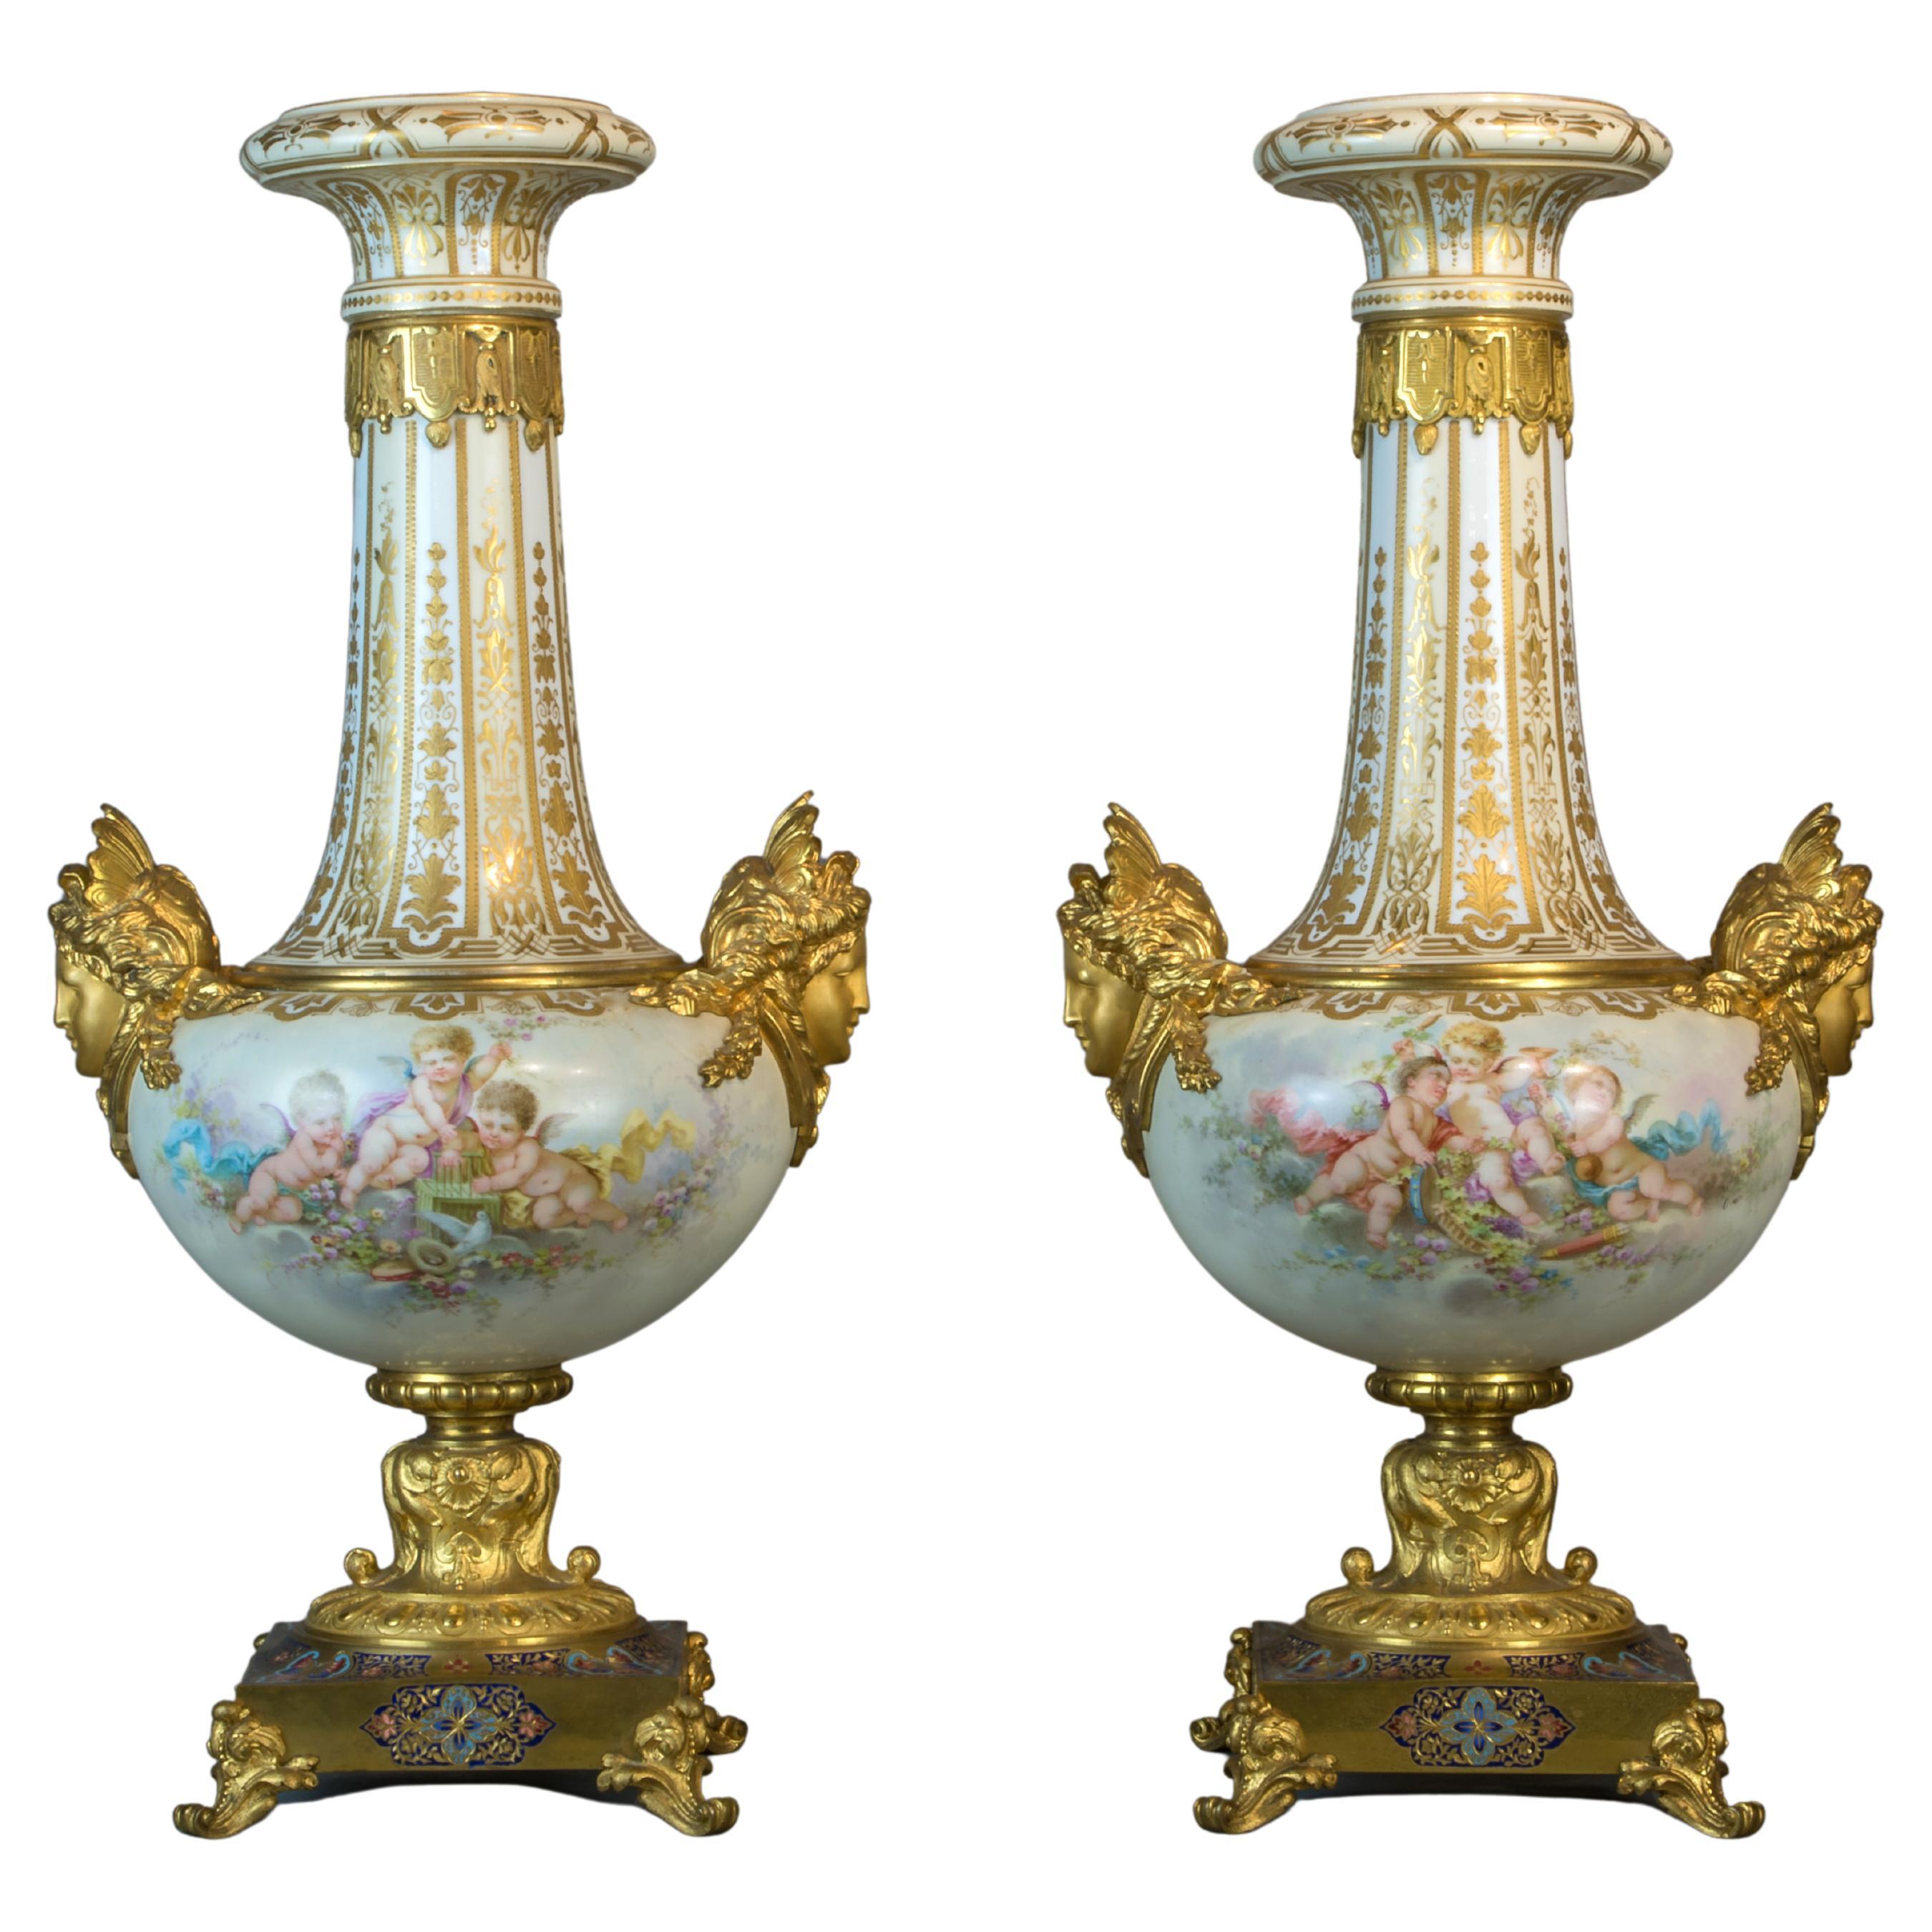 Pair of Ormolu-Mounted Sèvres-style Porcelain Champlevé Vases